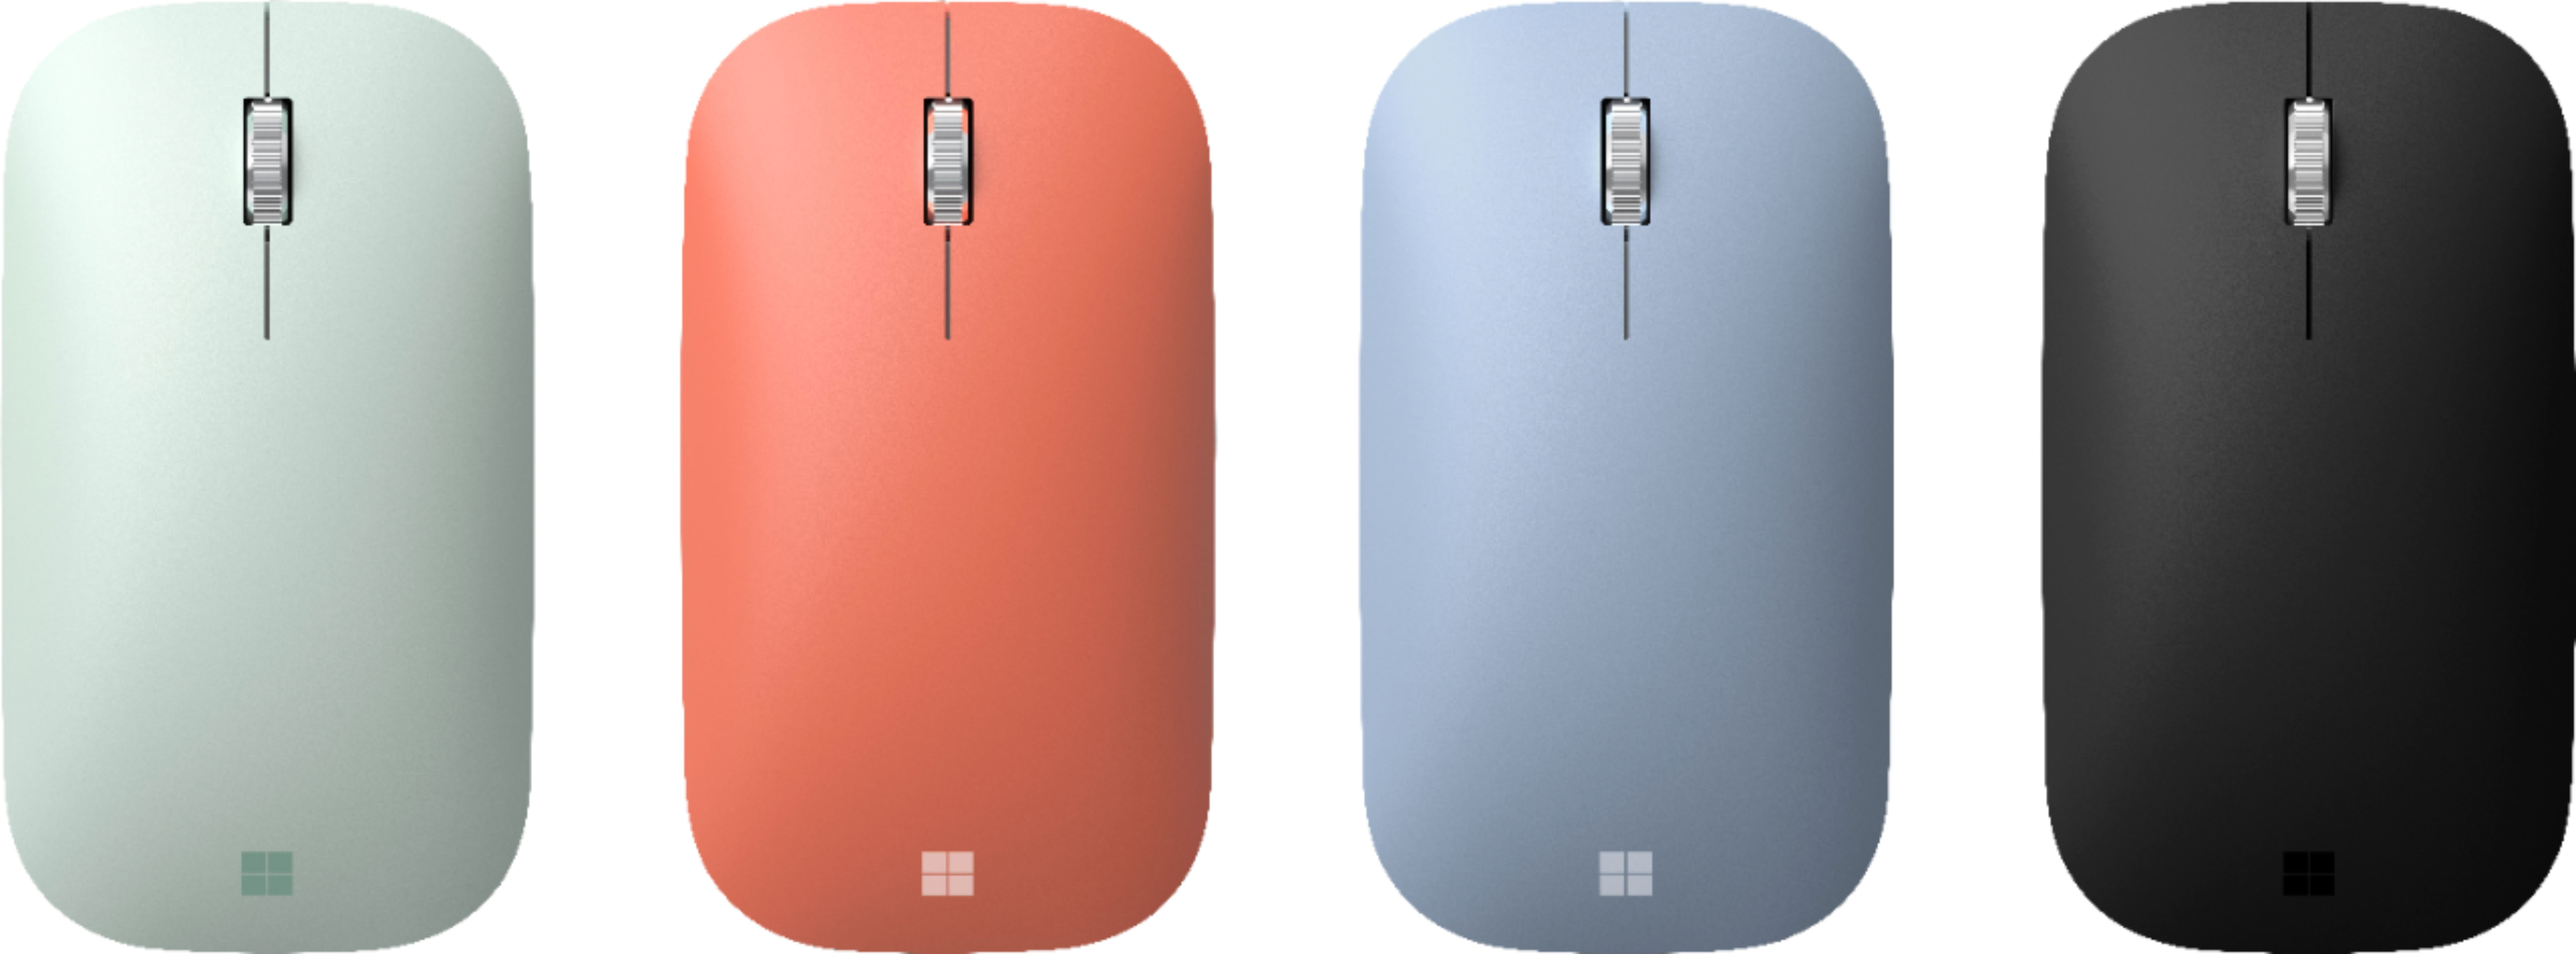 Microsoft surface mobile mouse - souris bluetooth - sable KGY00065 -  Conforama